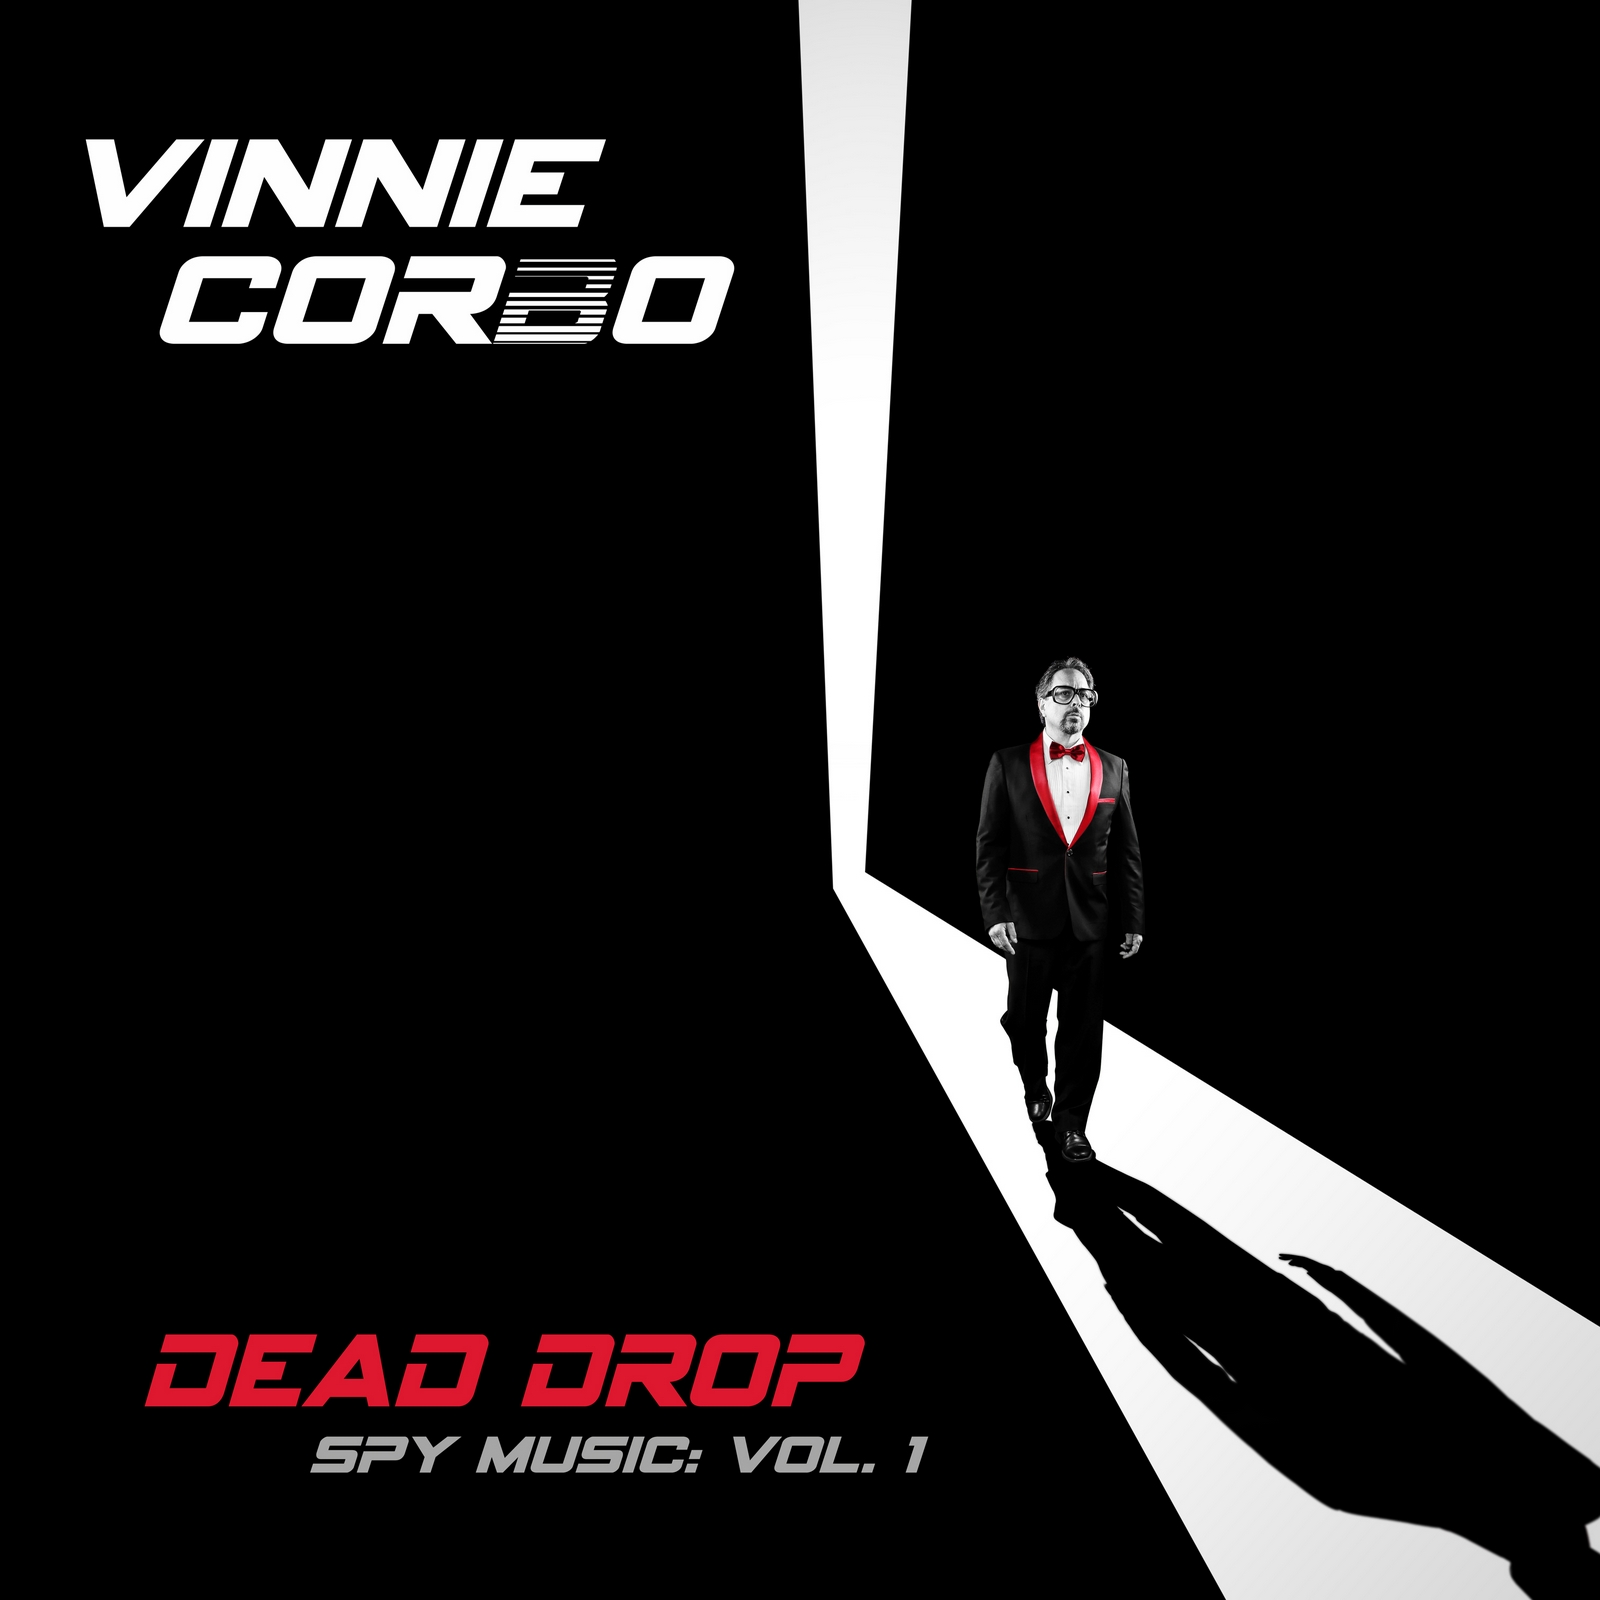 Vinnie Corbo Dead Drop (Spy Music: Vol. 1) Album Cover